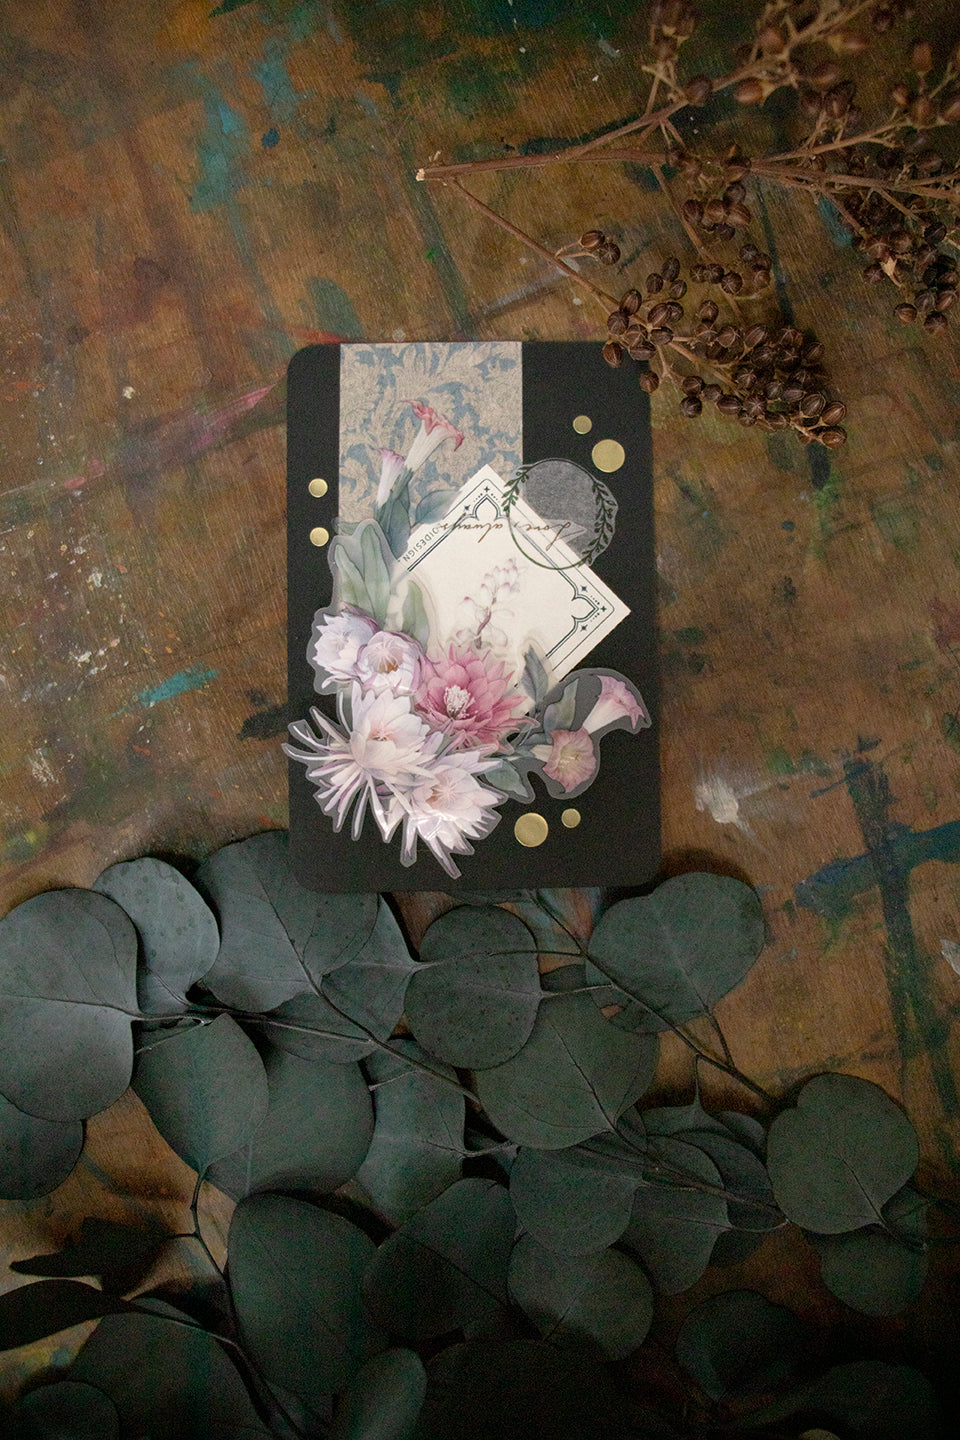 Loidesign "Youxiang" Epiphyllum Matte PET Tape